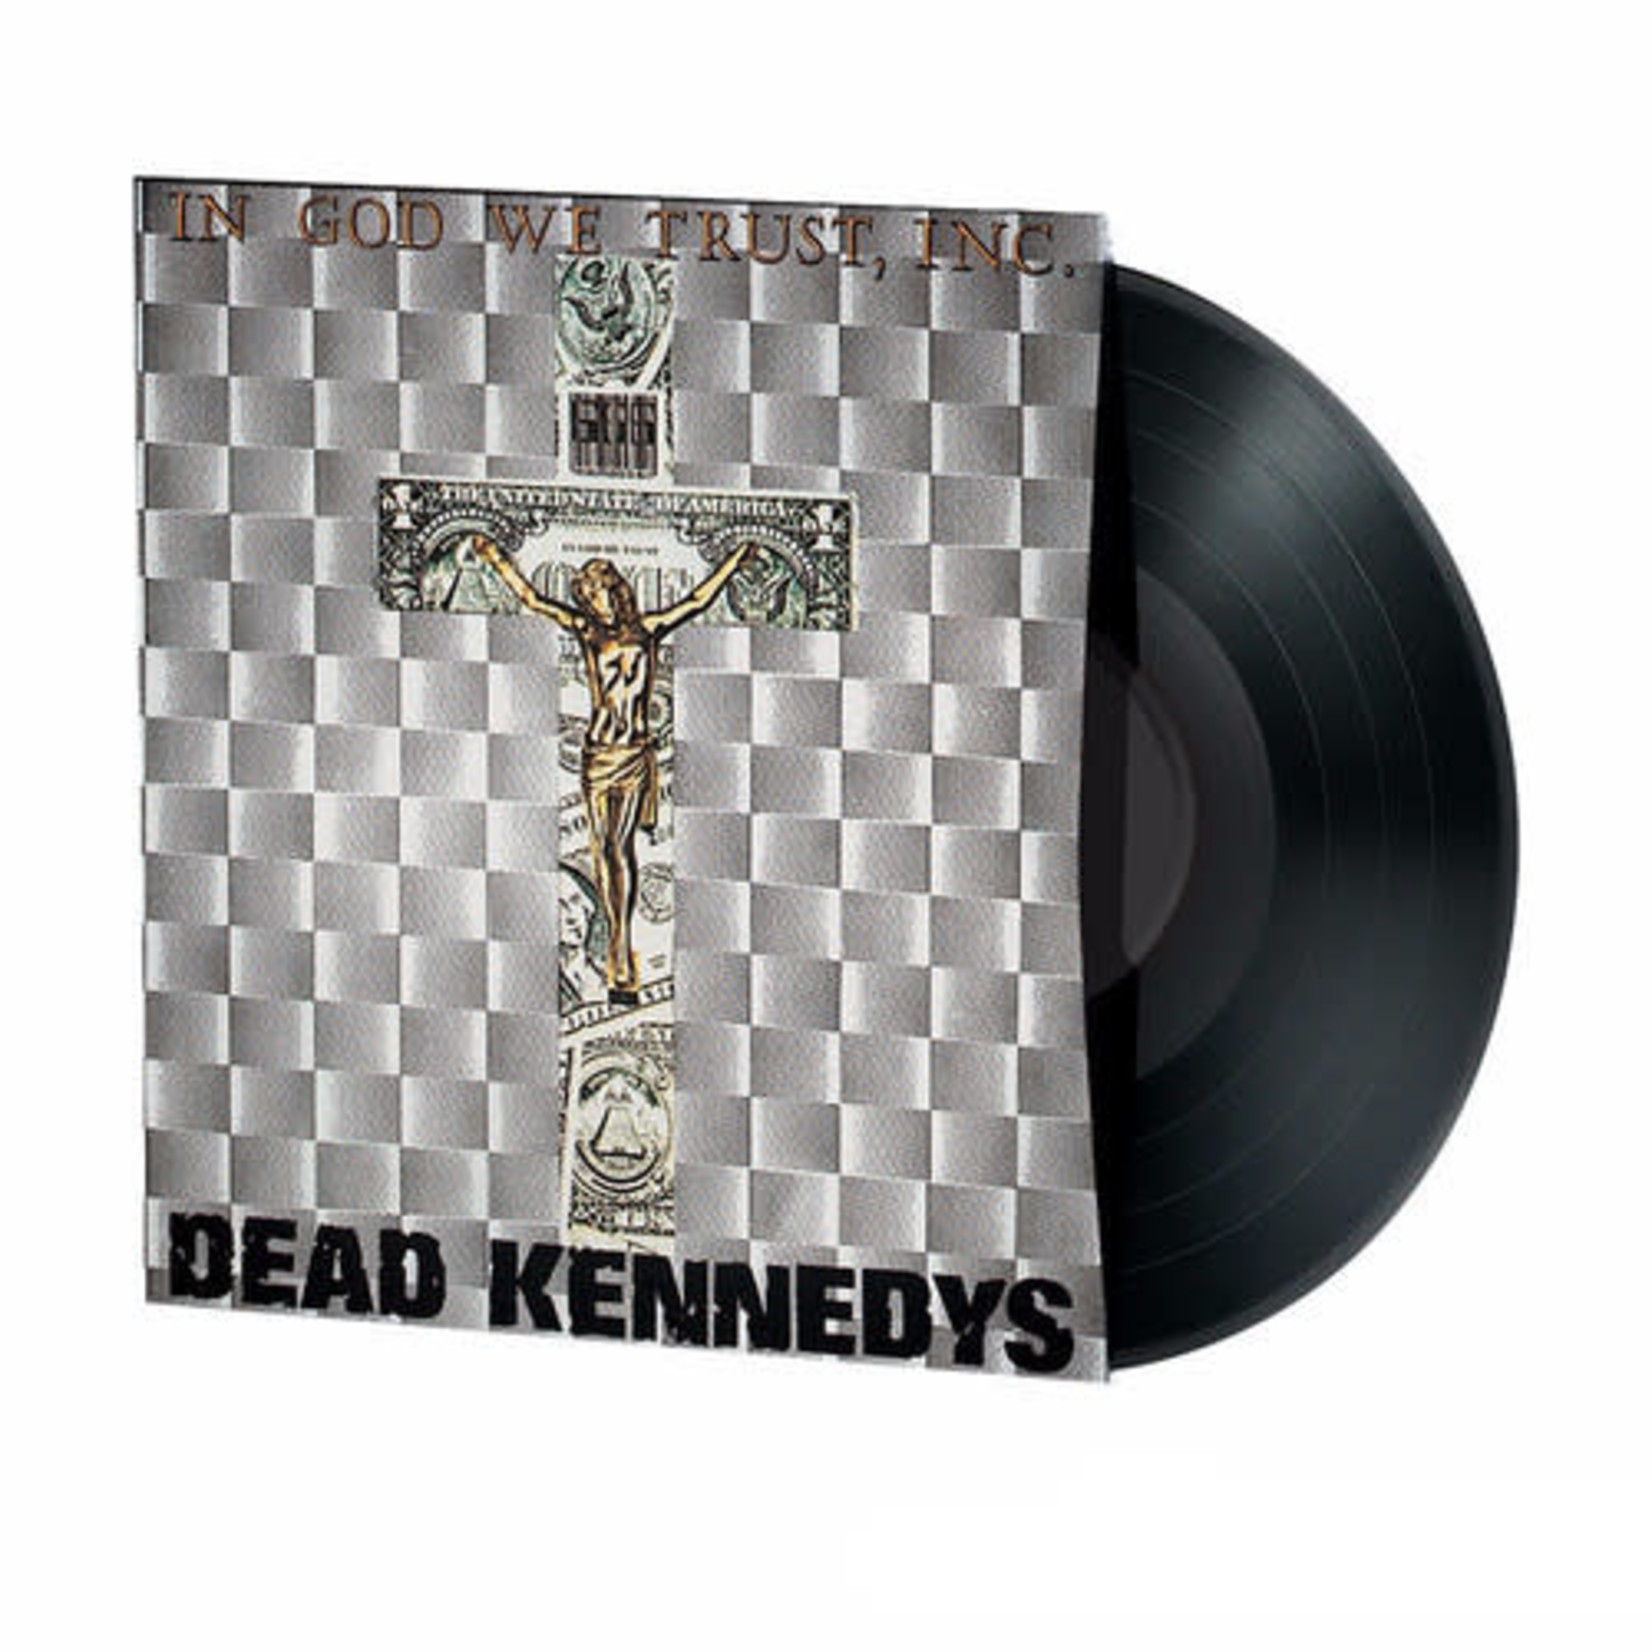 Manifesto Dead Kennedys - In God We Trust, Inc. (LP) [45RPM]